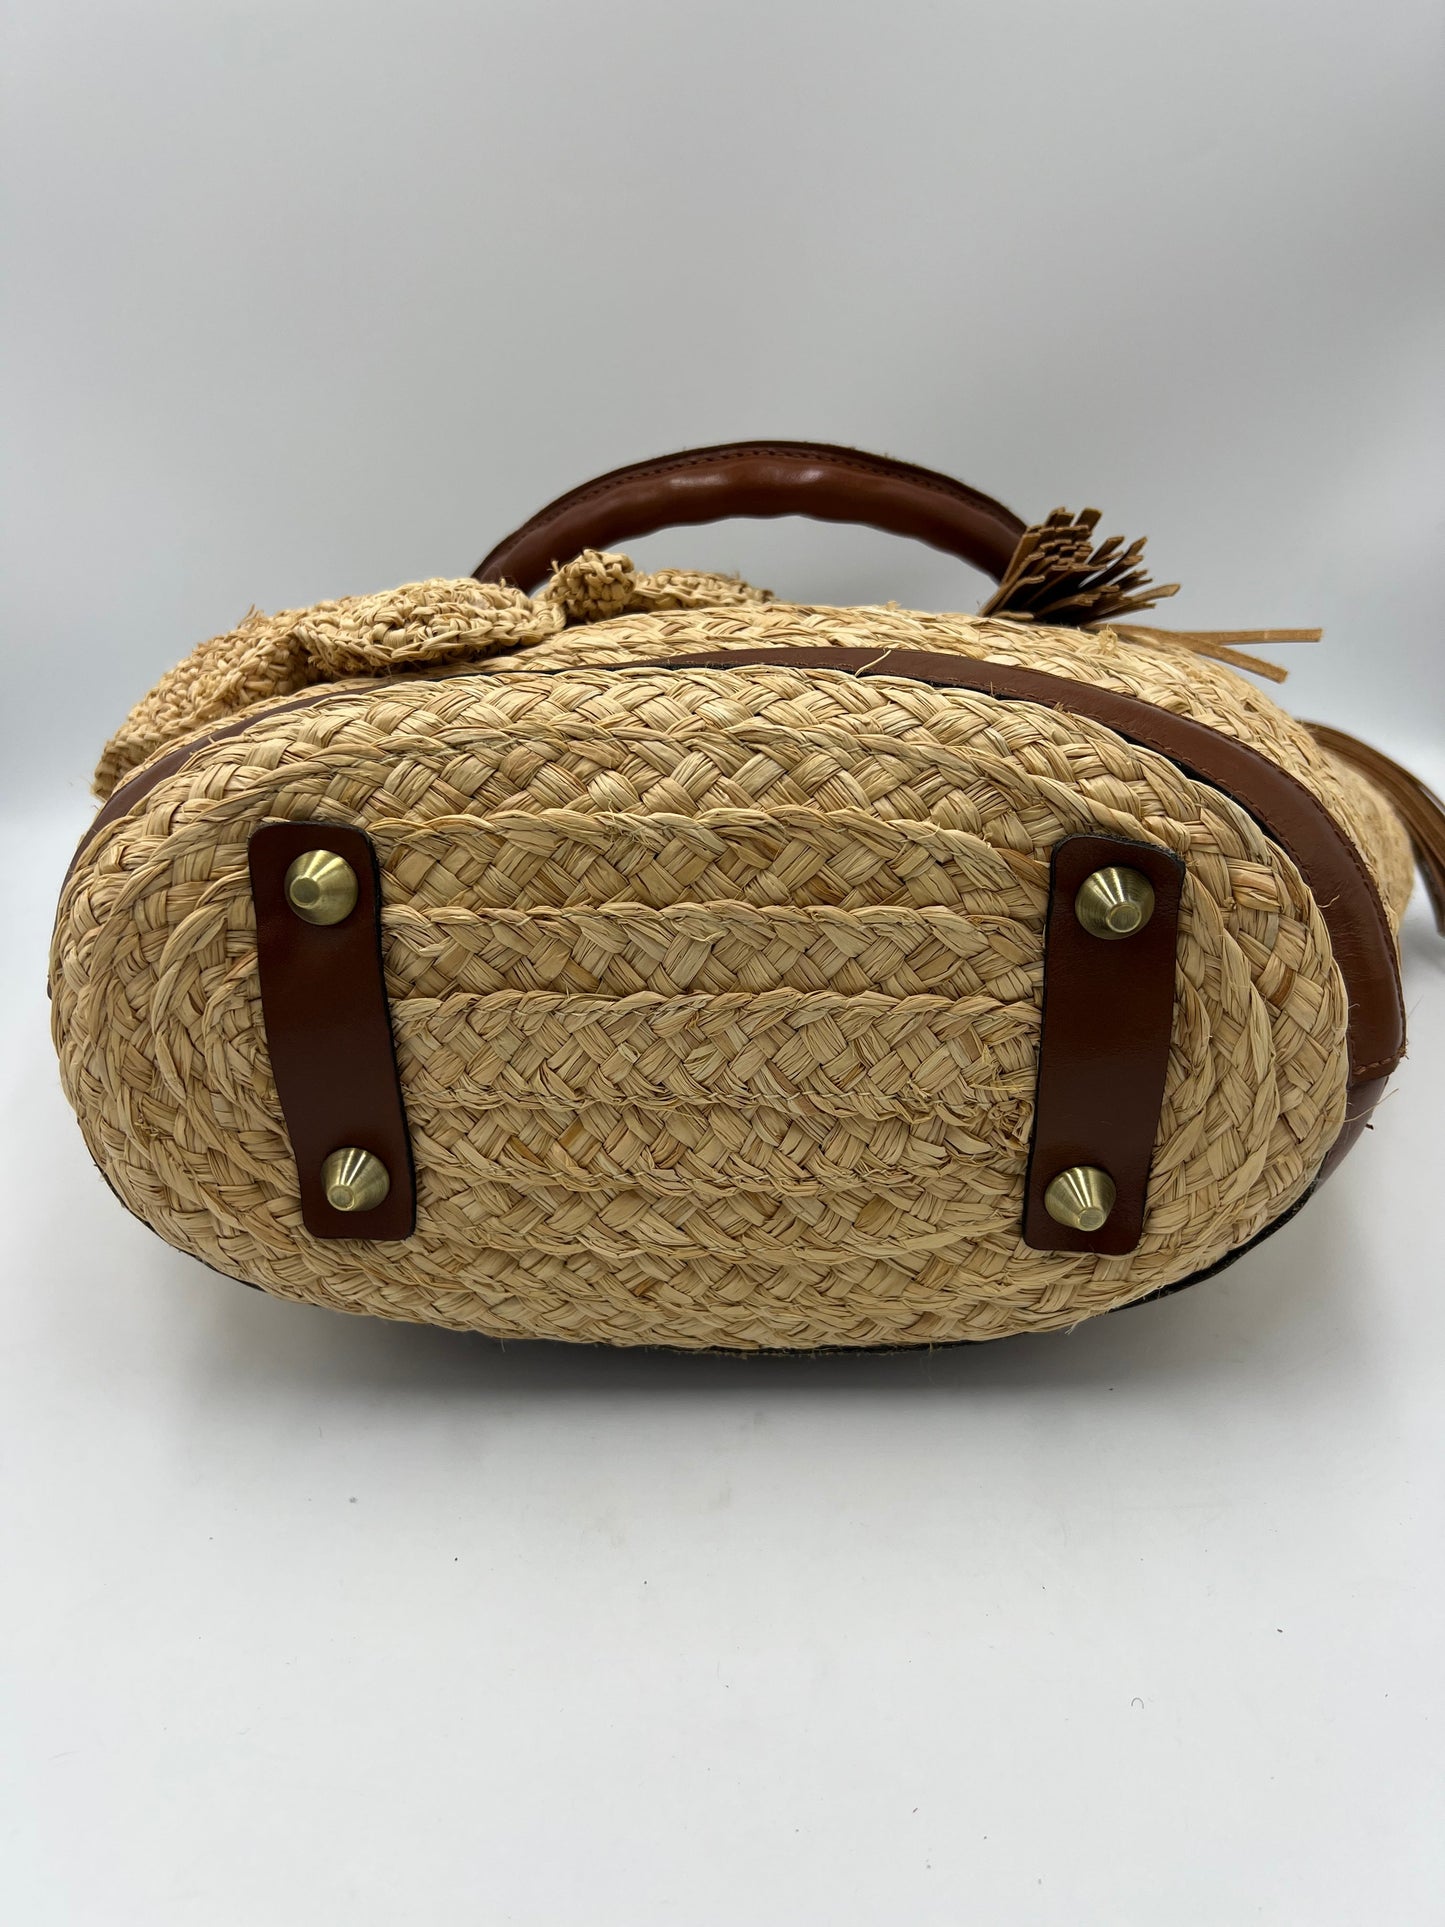 Like New! Handbag Designer By Patricia Nash  Size: Medium